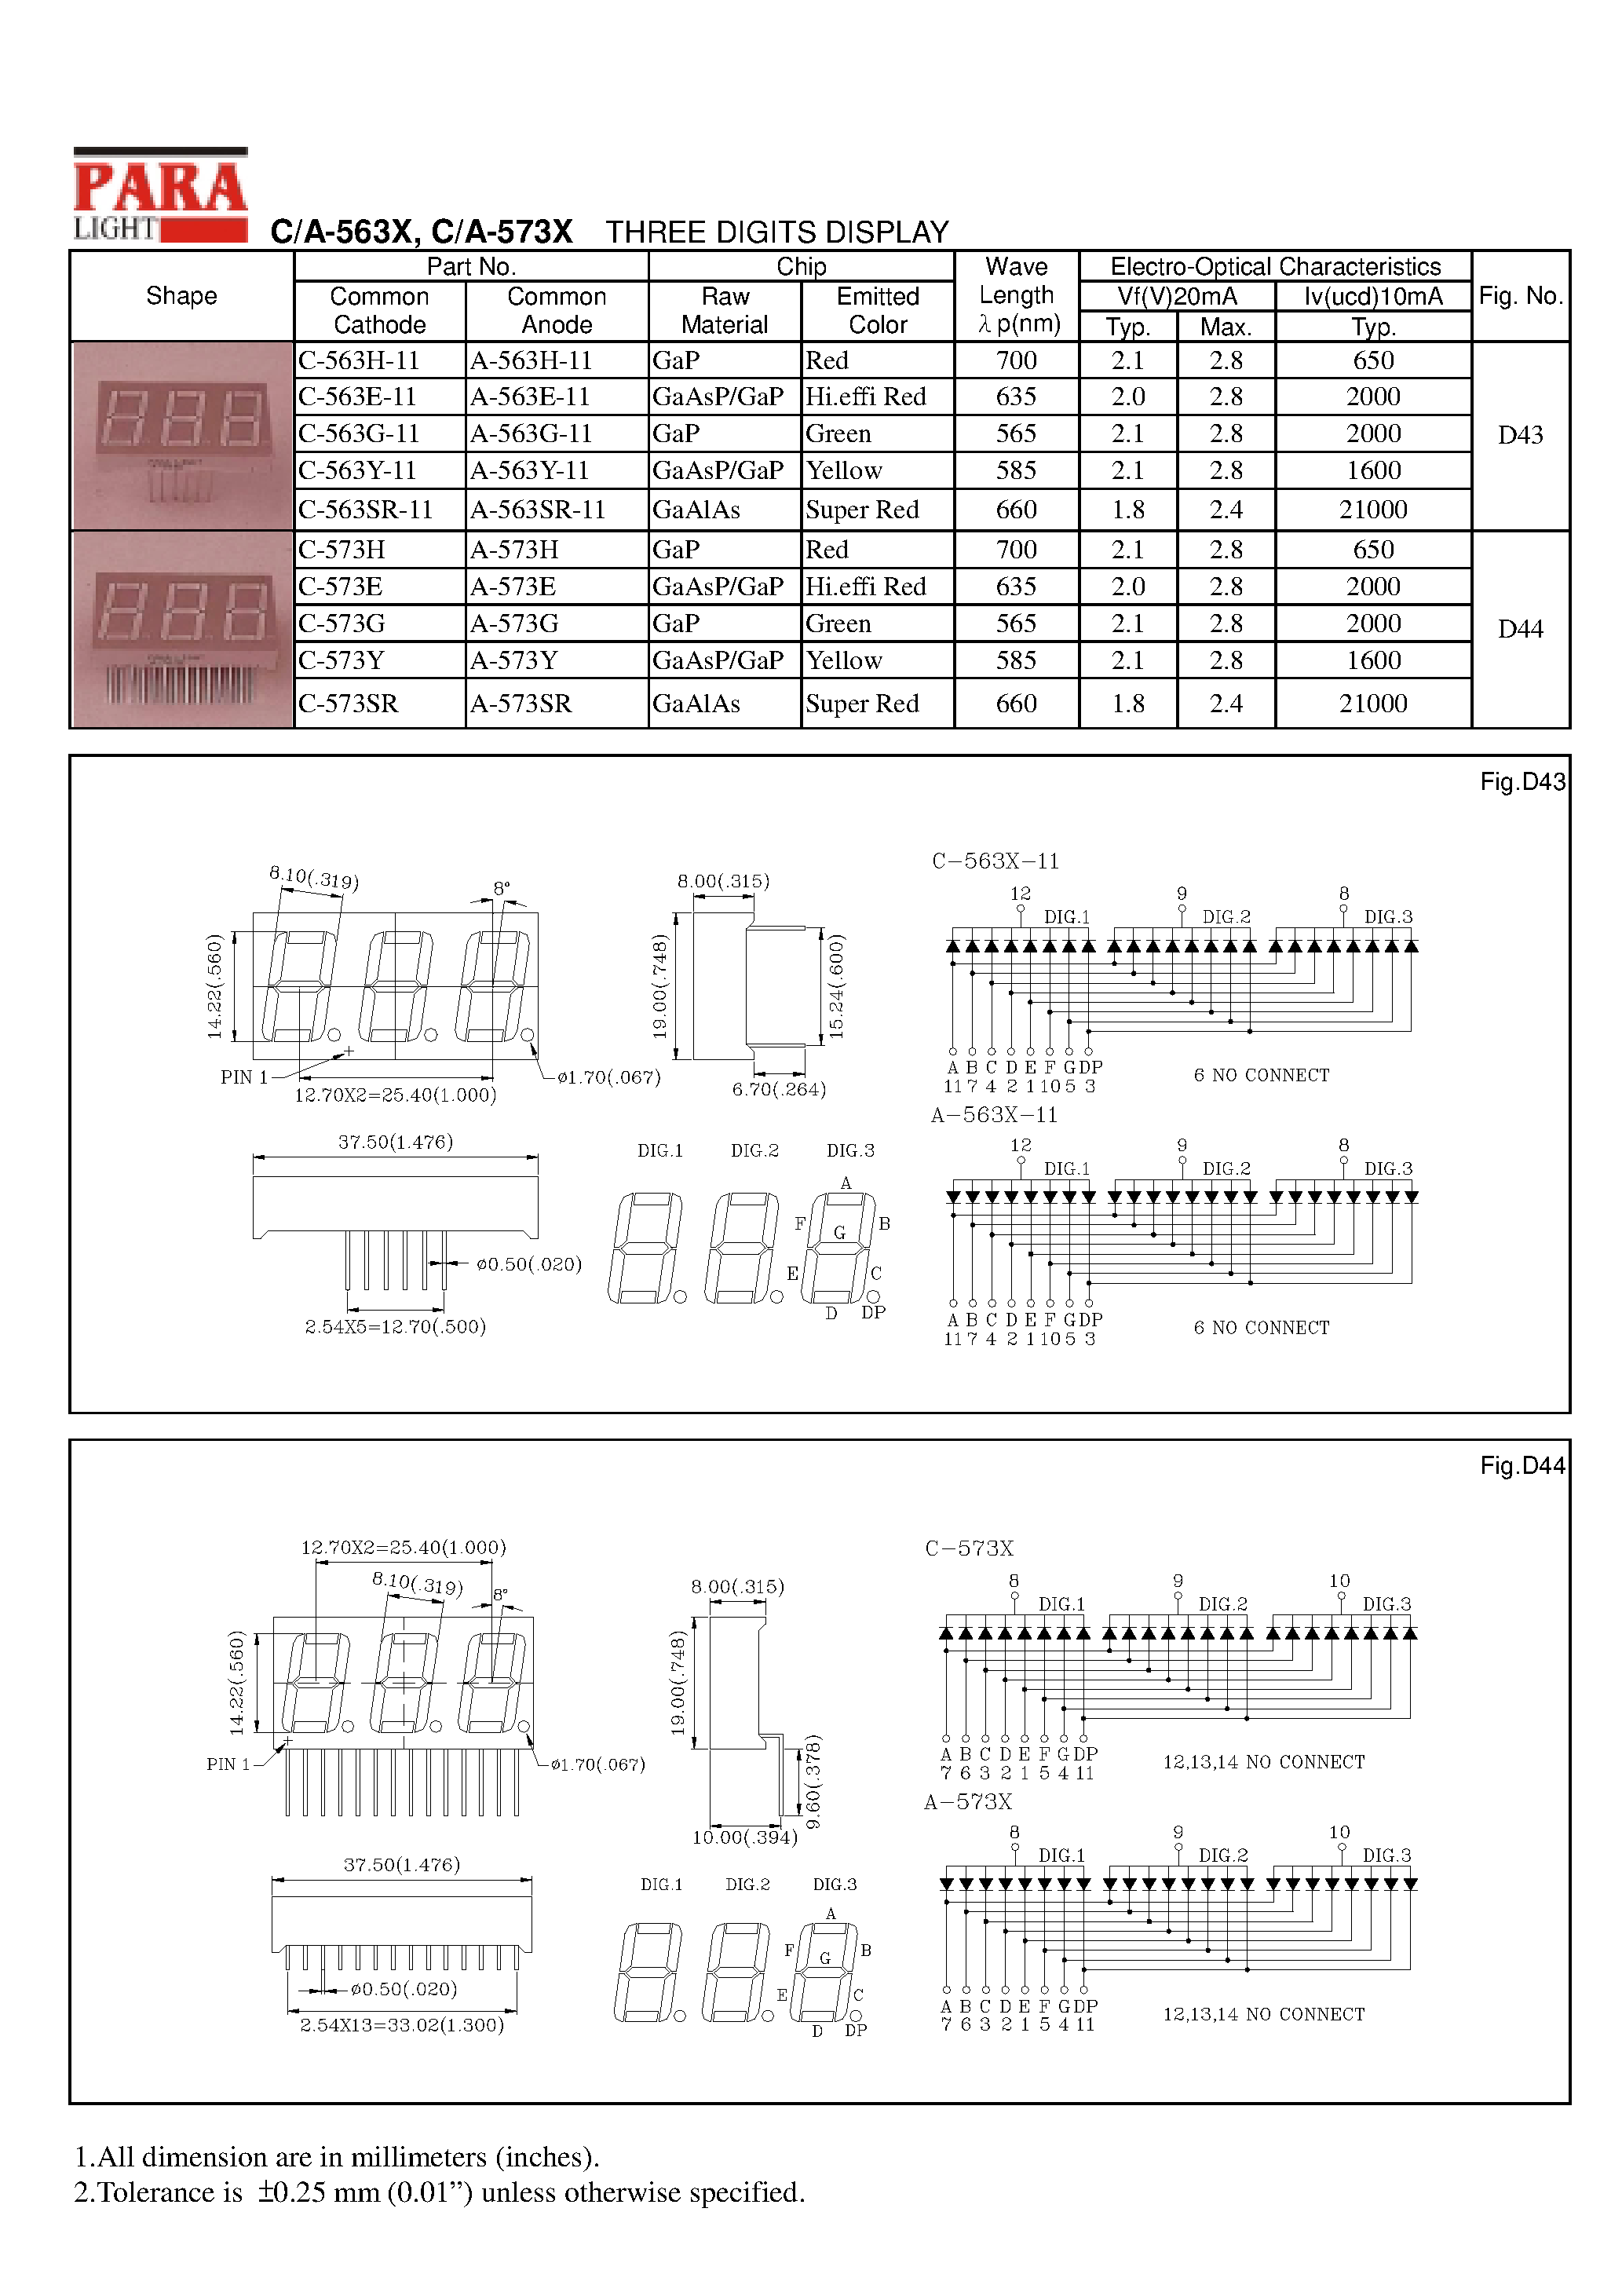 Datasheet A-563E-11 - THREE DIGITS DISPLAY page 1